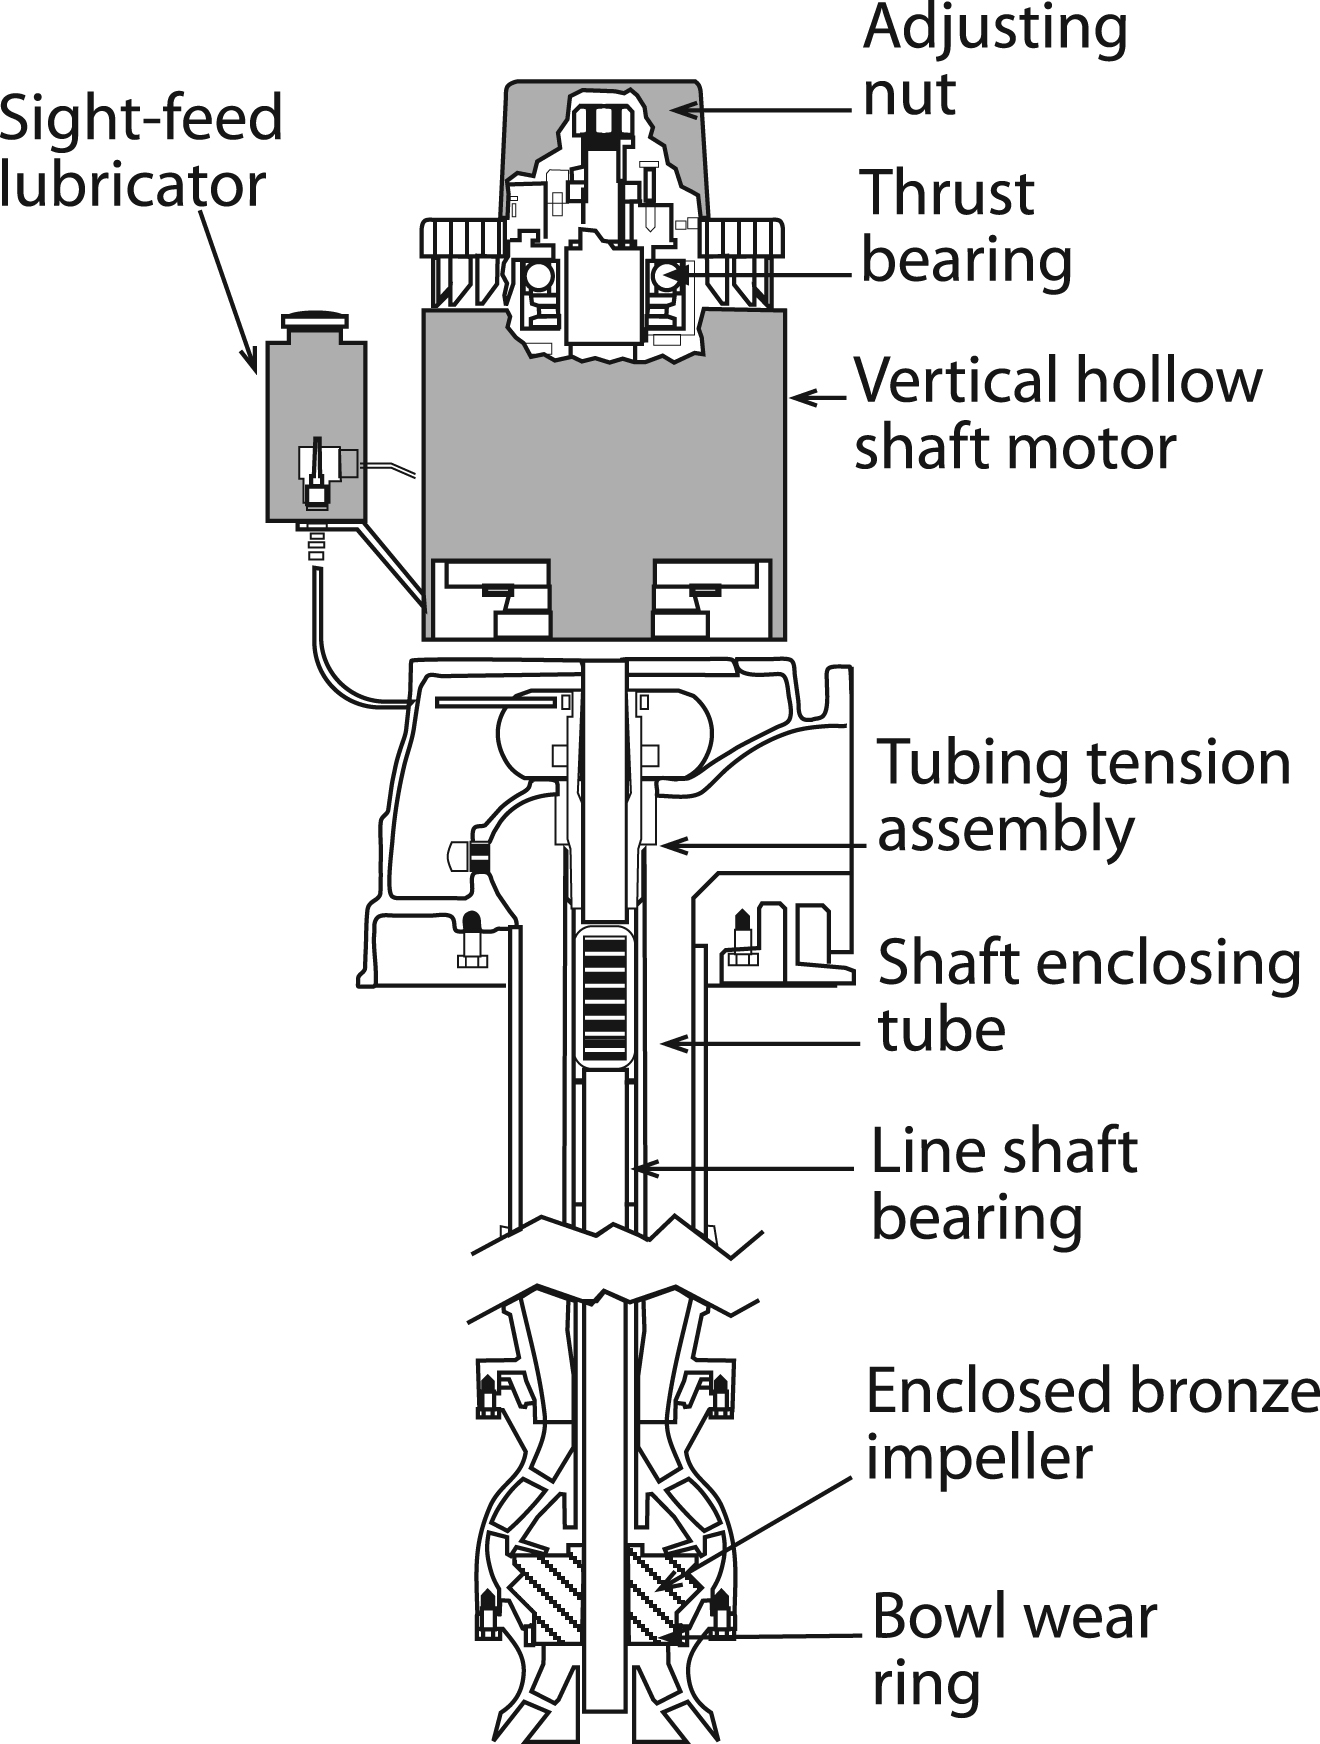 diagram of an oil-lubricated turbine pump